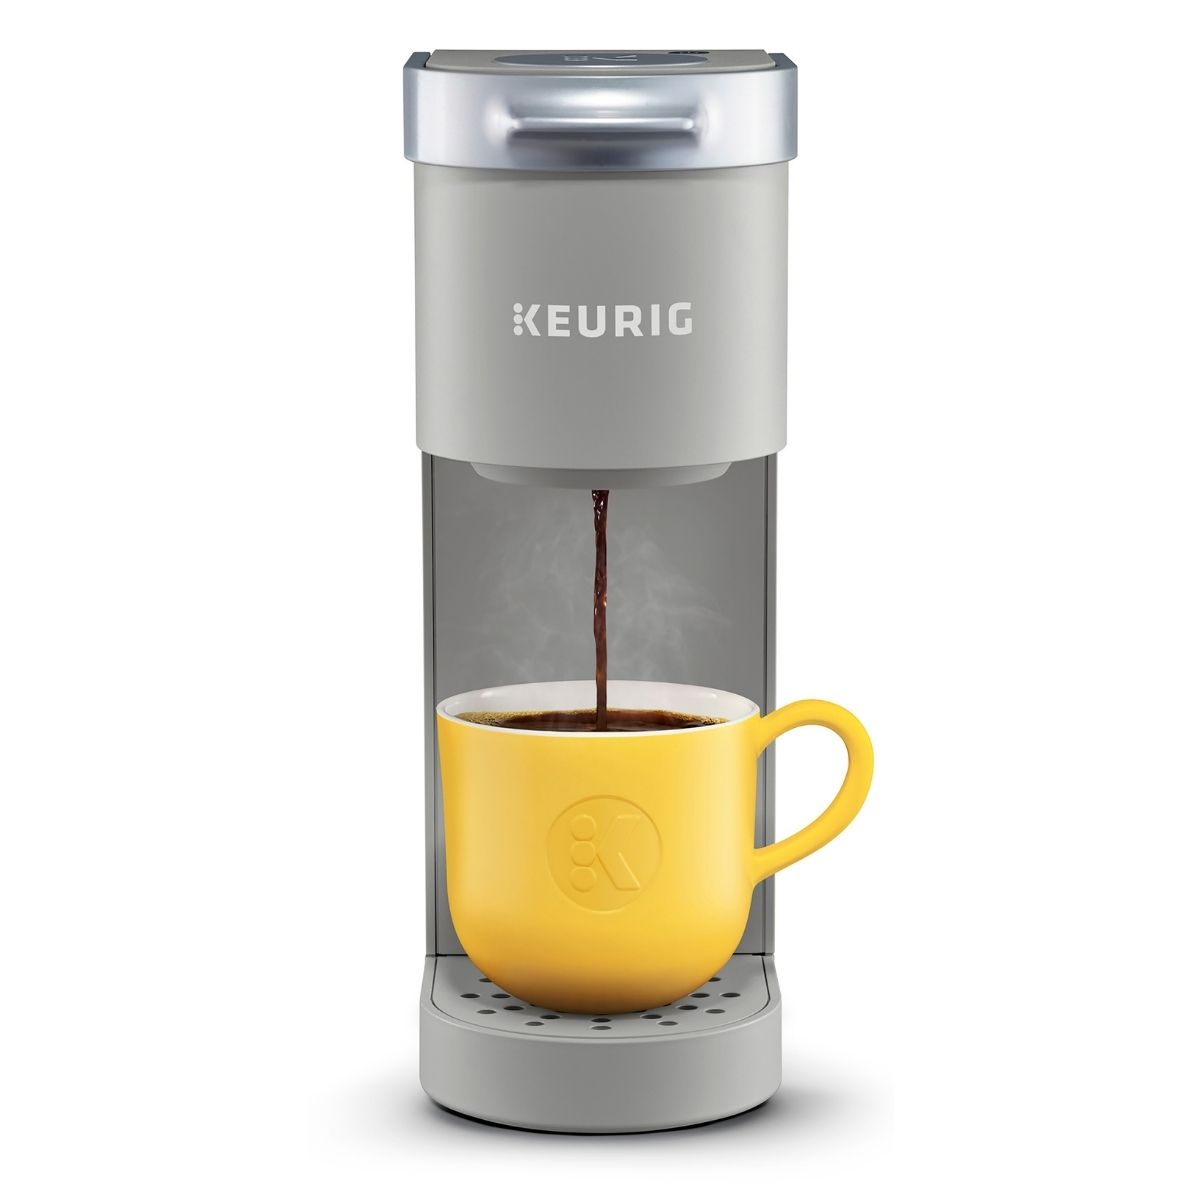 The Keurig Black Friday Option: Keurig K-Mini Single Serve Coffee Maker